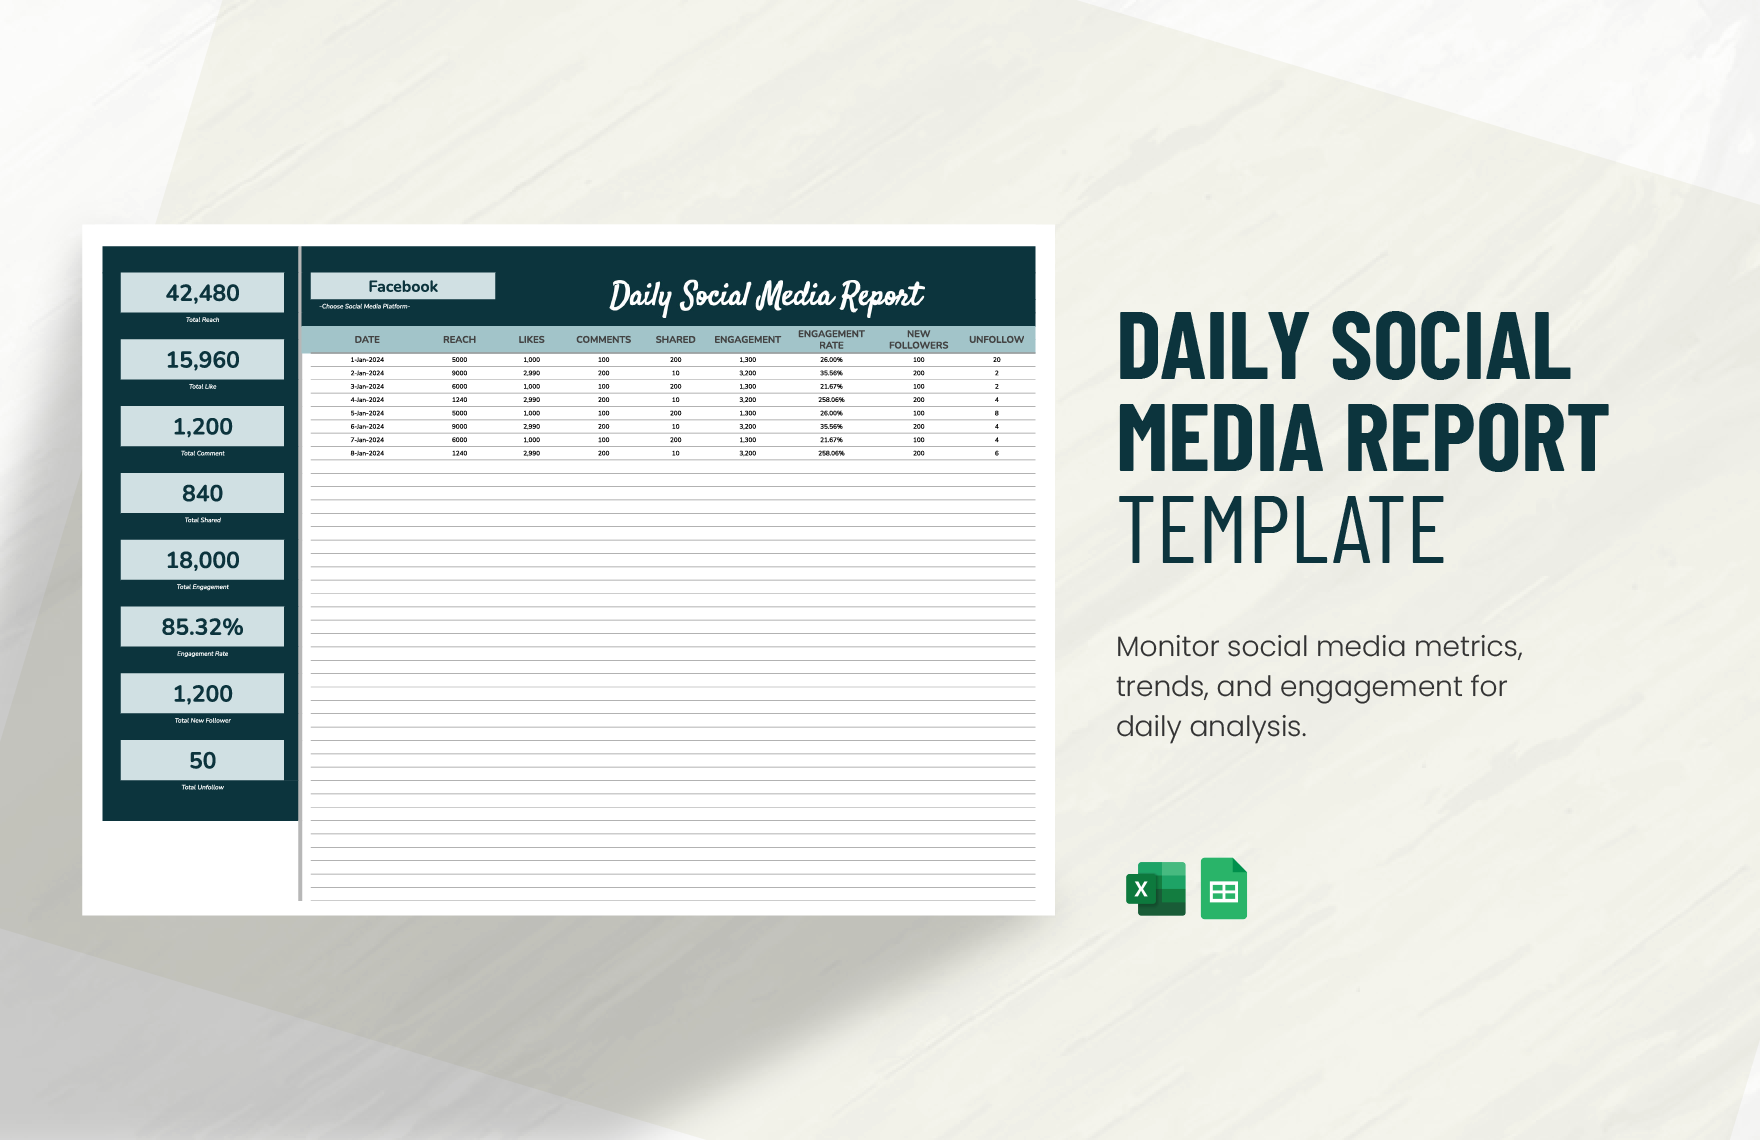 Daily Social Media Report Template